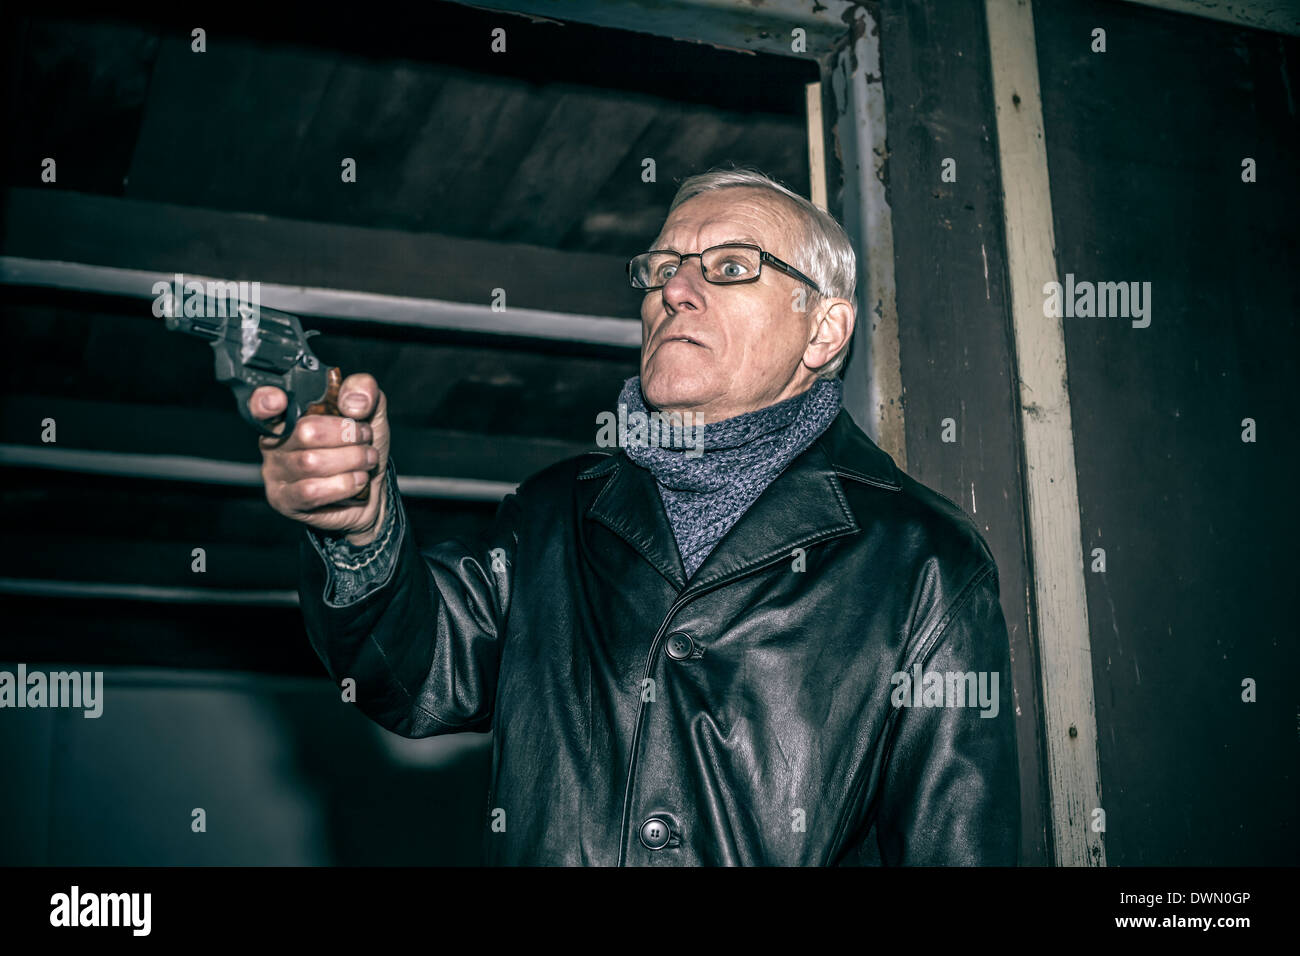 Dangerous senior man aiming a gun and standing in old dark cabin. Stock Photo